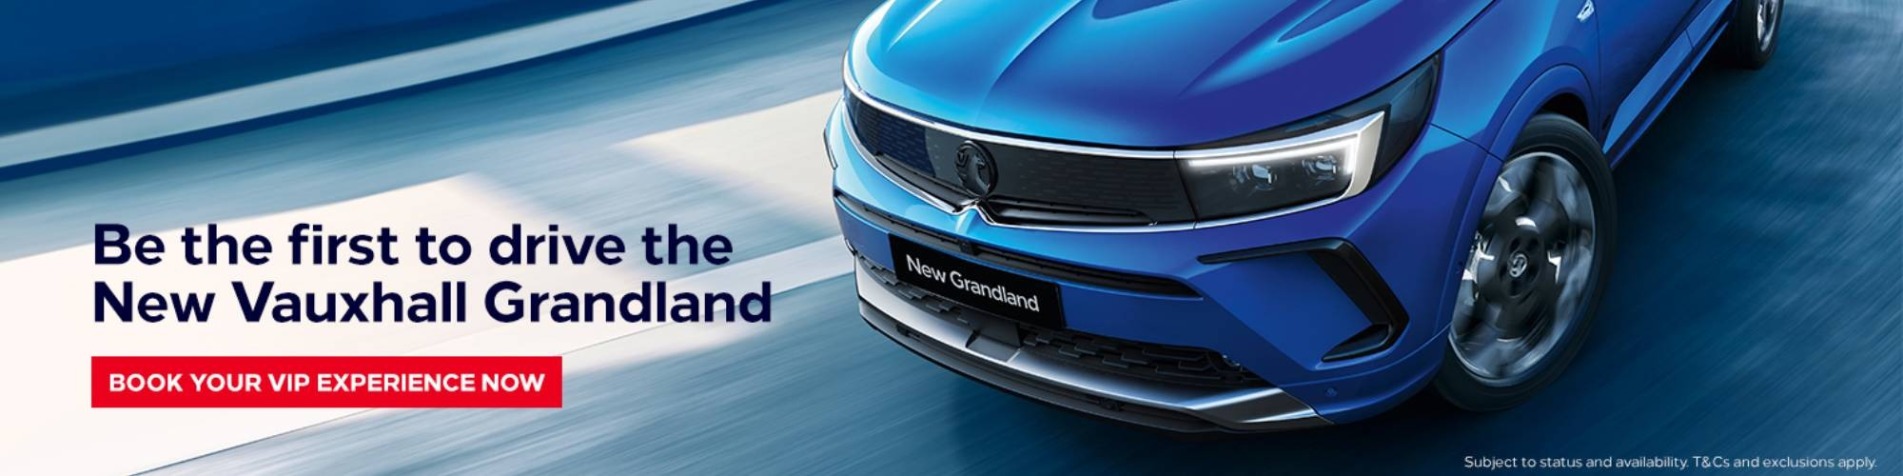 Vauxhall Grandland VIP Experience Banner